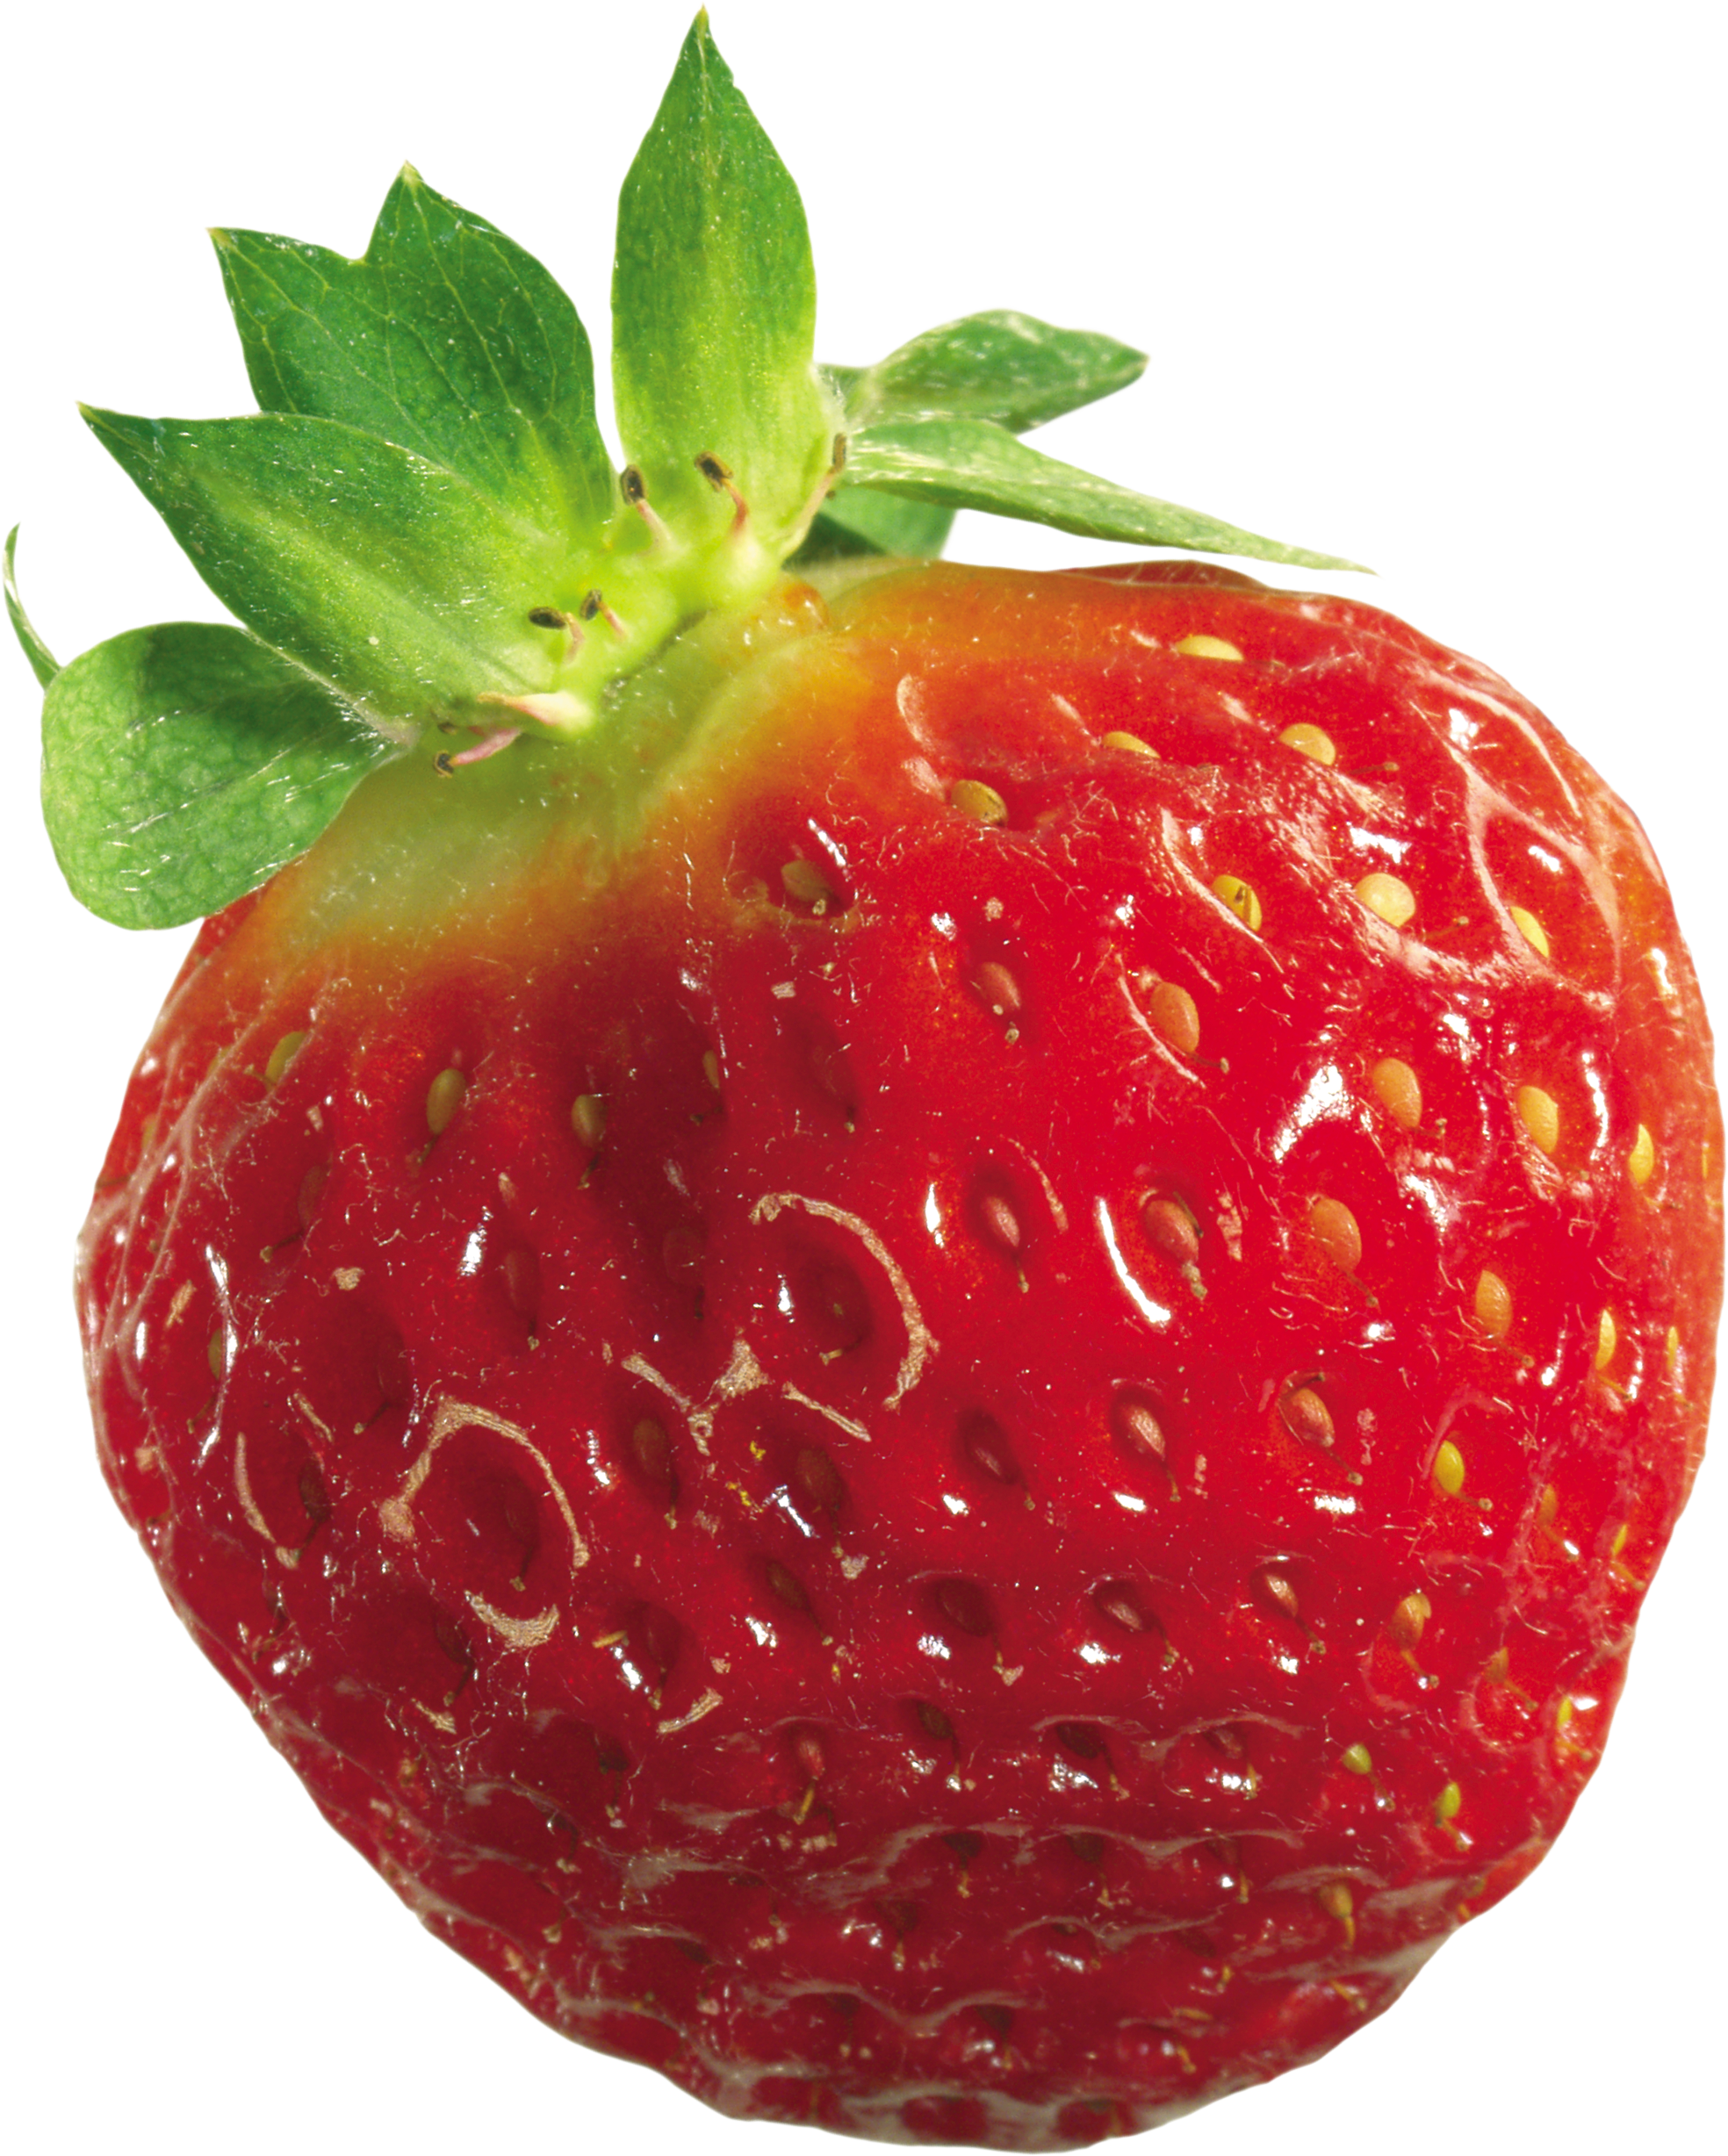 大红草莓